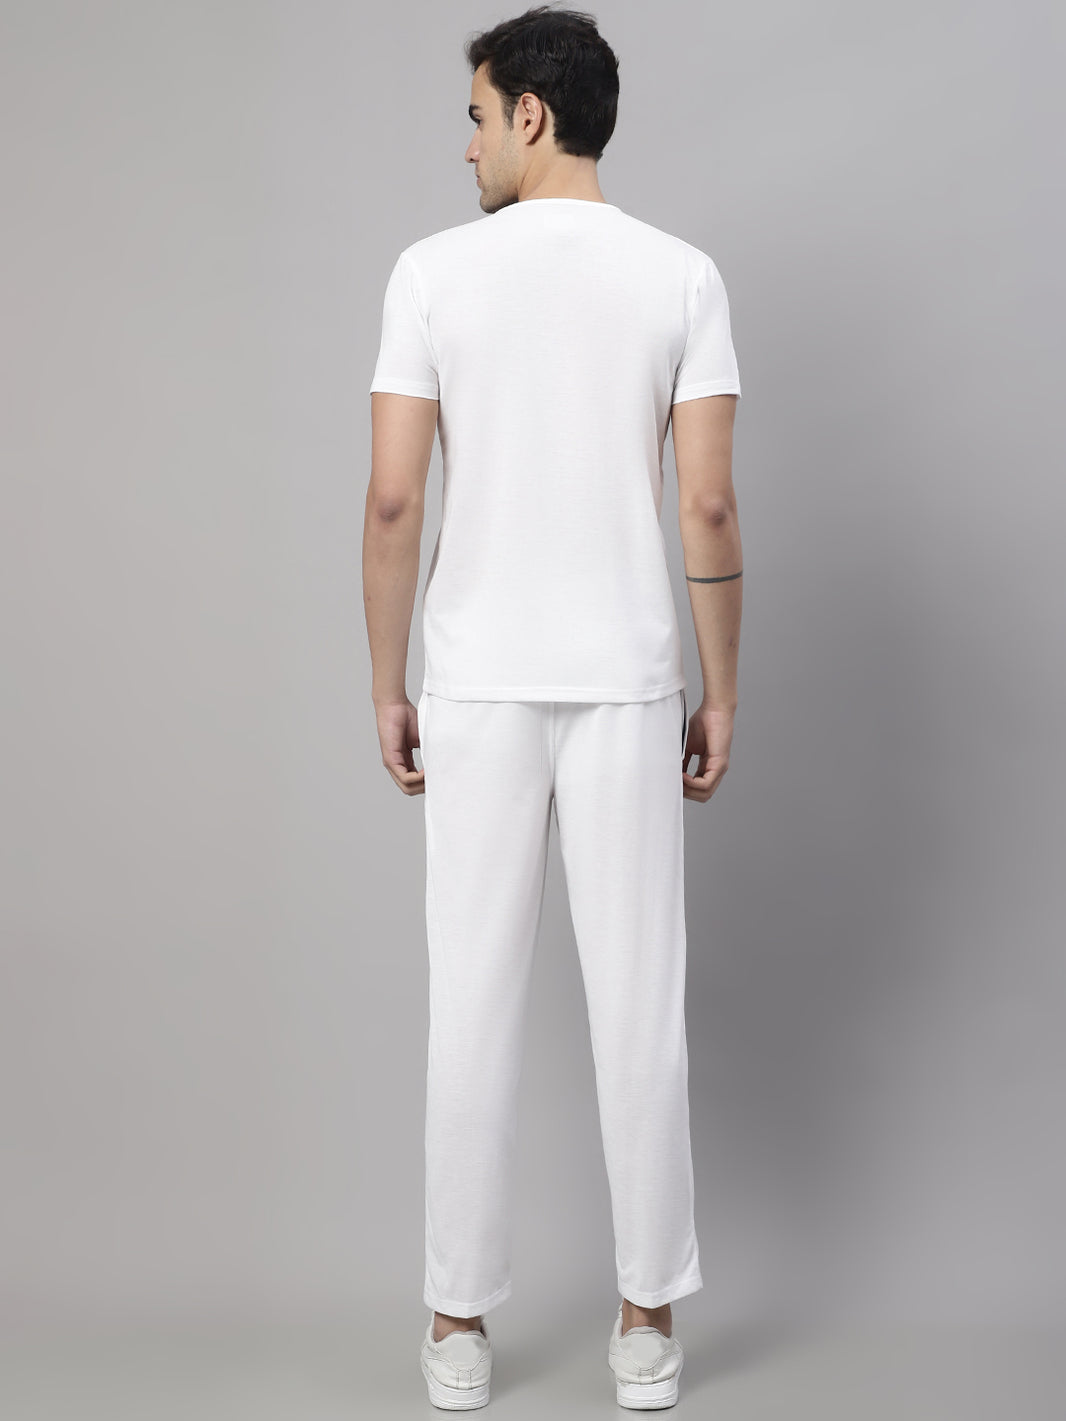 Vimal Jonney White Cotton Solid Co-ord Set Tracksuit For Men(Zip On 1 Side Pocket)